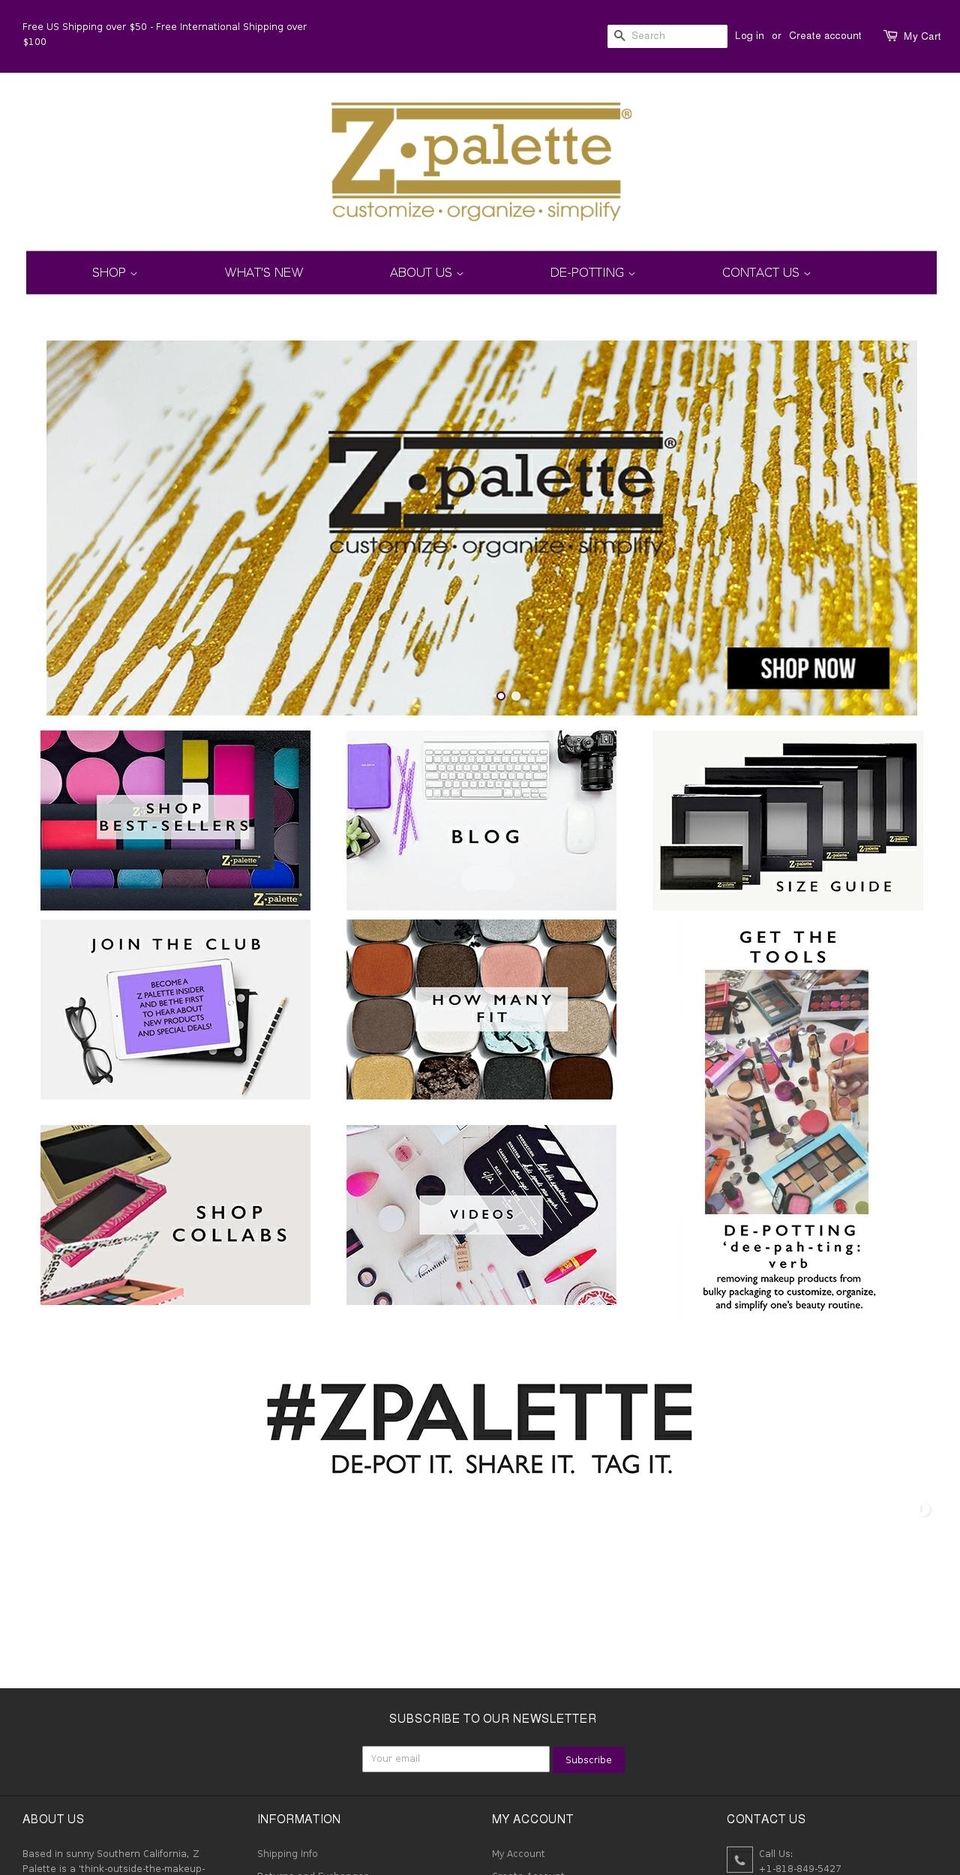 zpalette.com shopify website screenshot